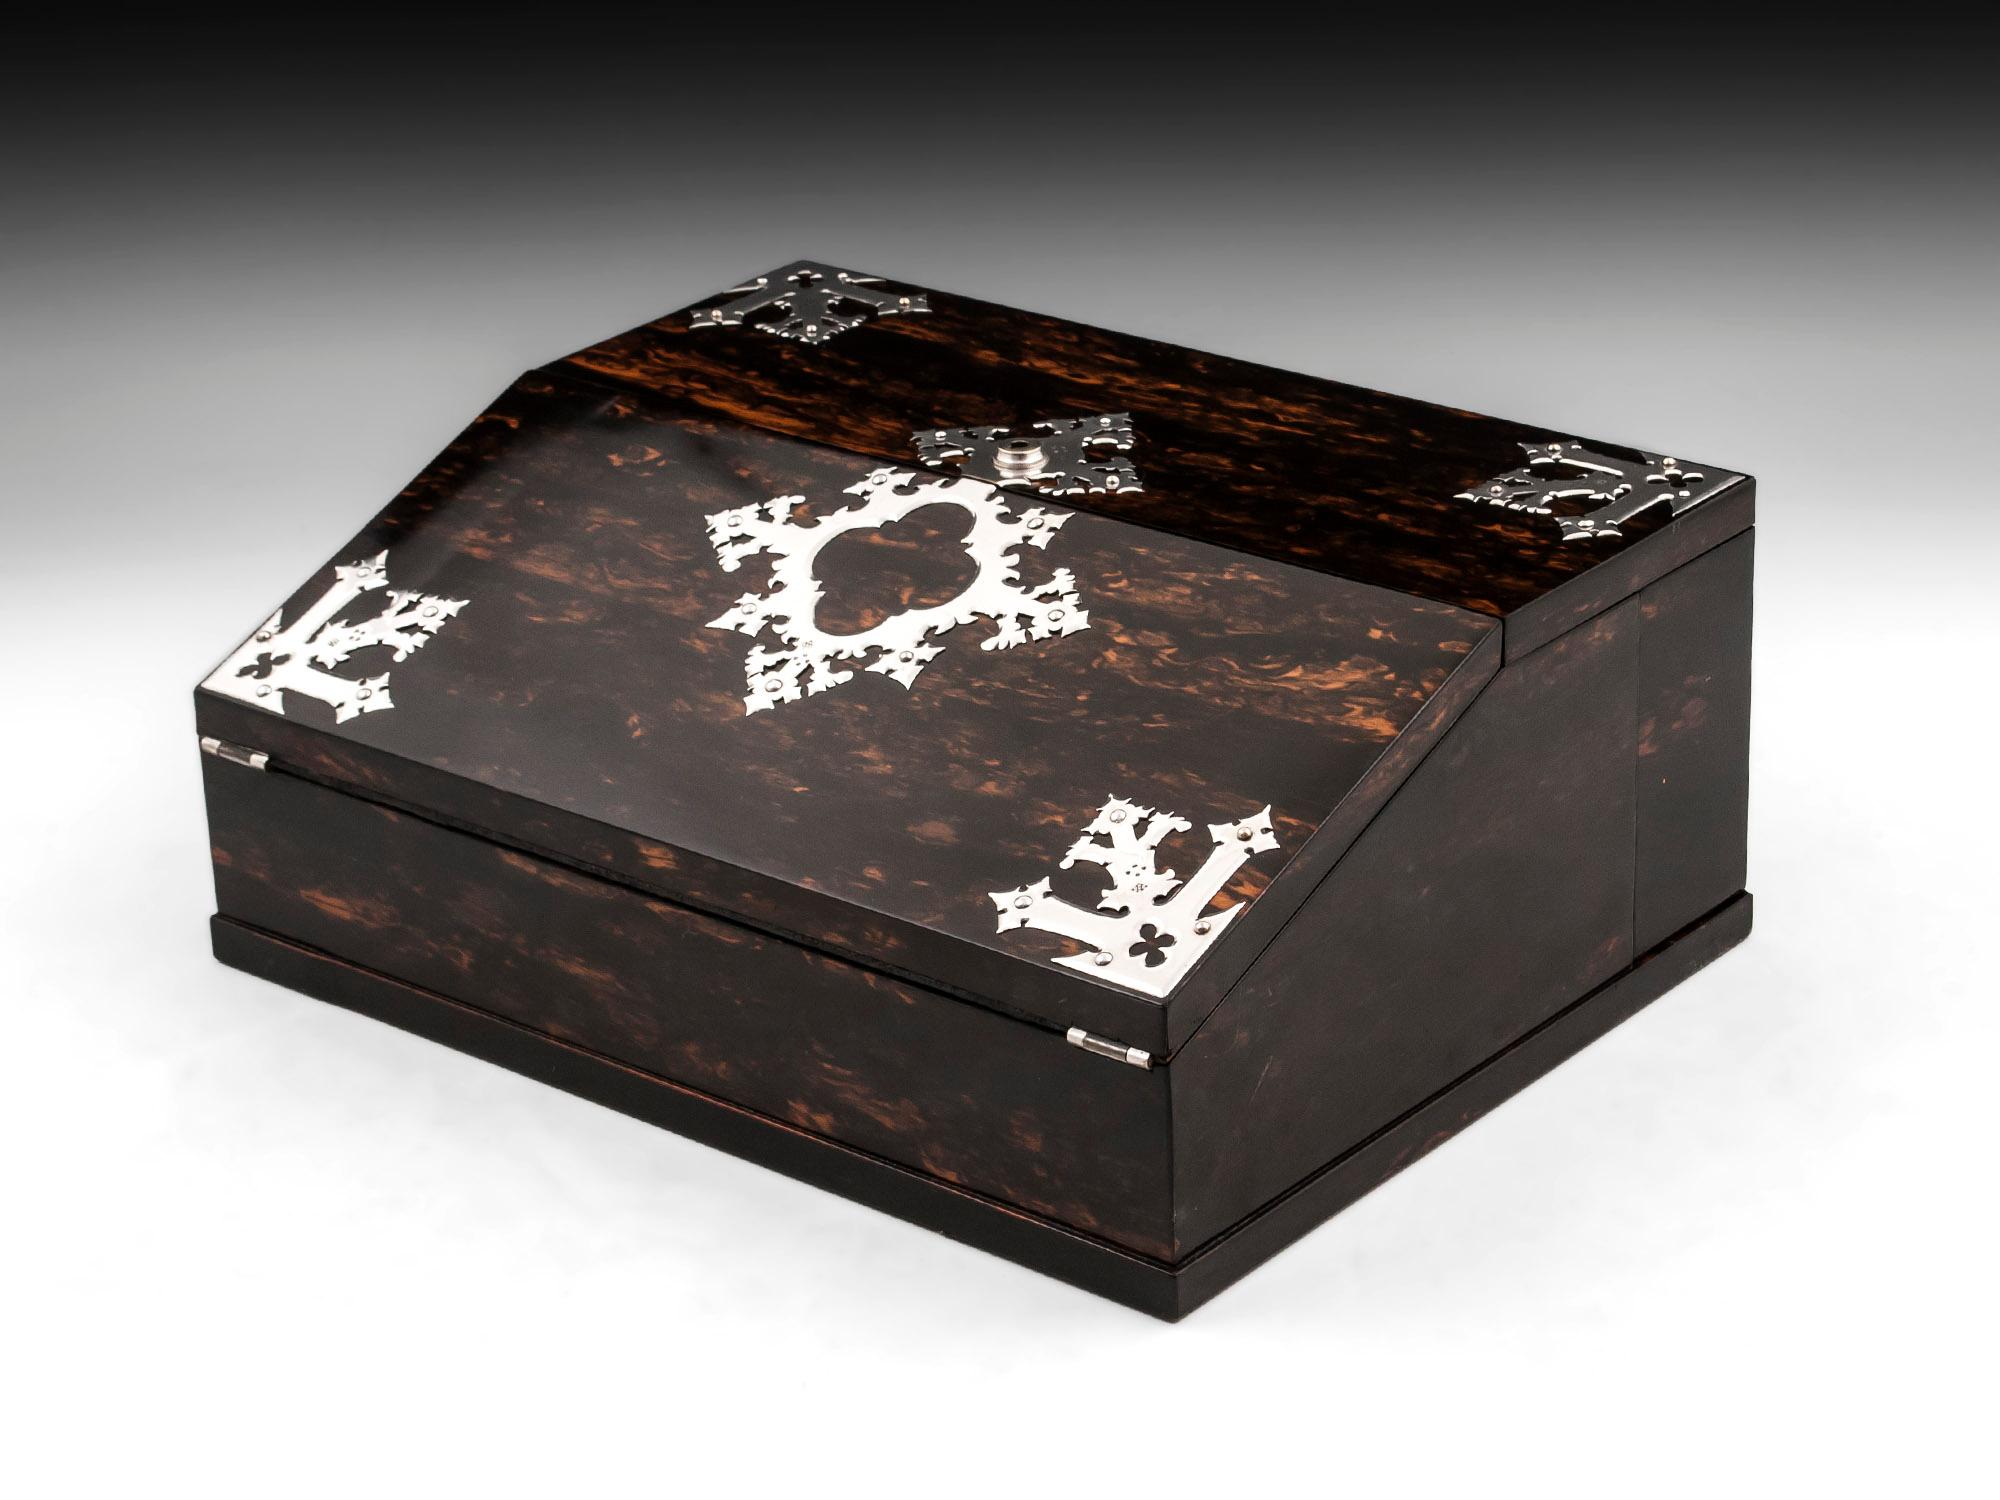 British Antique George Betjemann Coromandel Satinwood Silver Writing Box, 19th Century